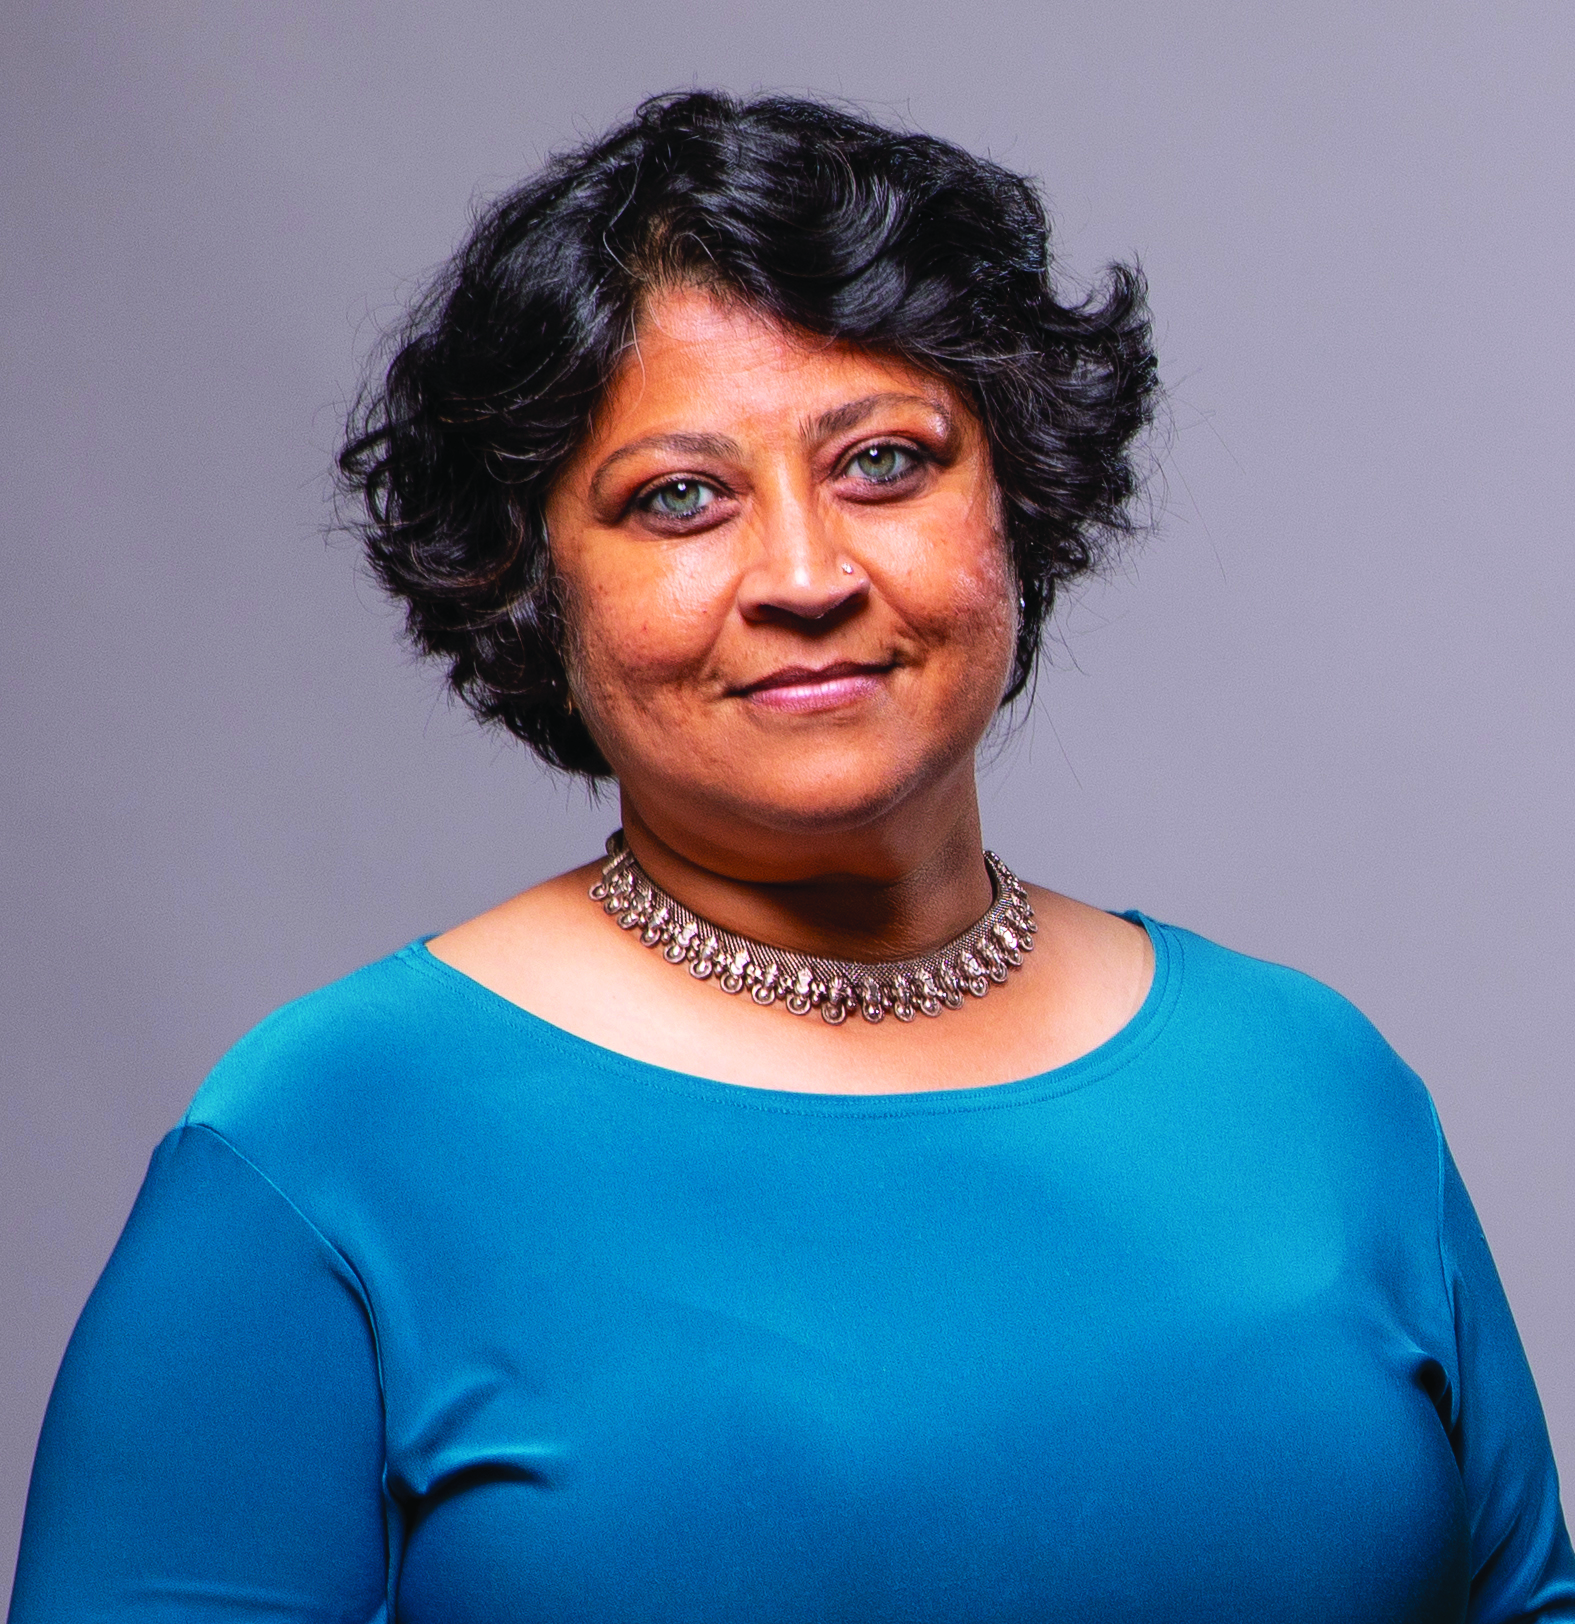 UMass Amherst social psychologist Nilanjana Dasgupta